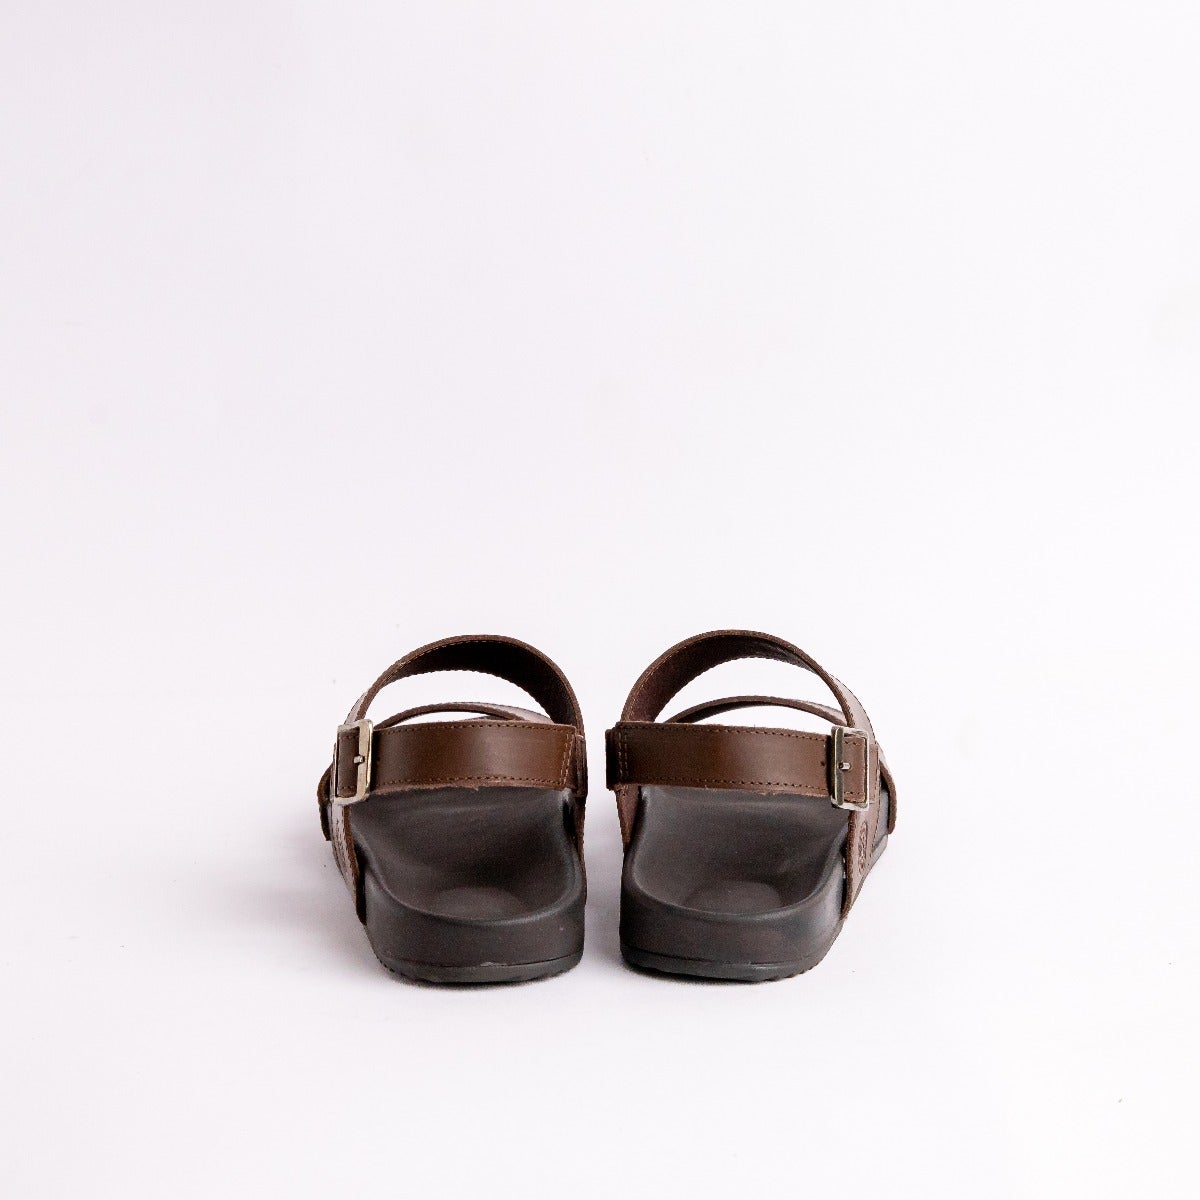 Buy Men Leather Sandals Handmade Men Sandals Greek Style Men Online in India   Etsy